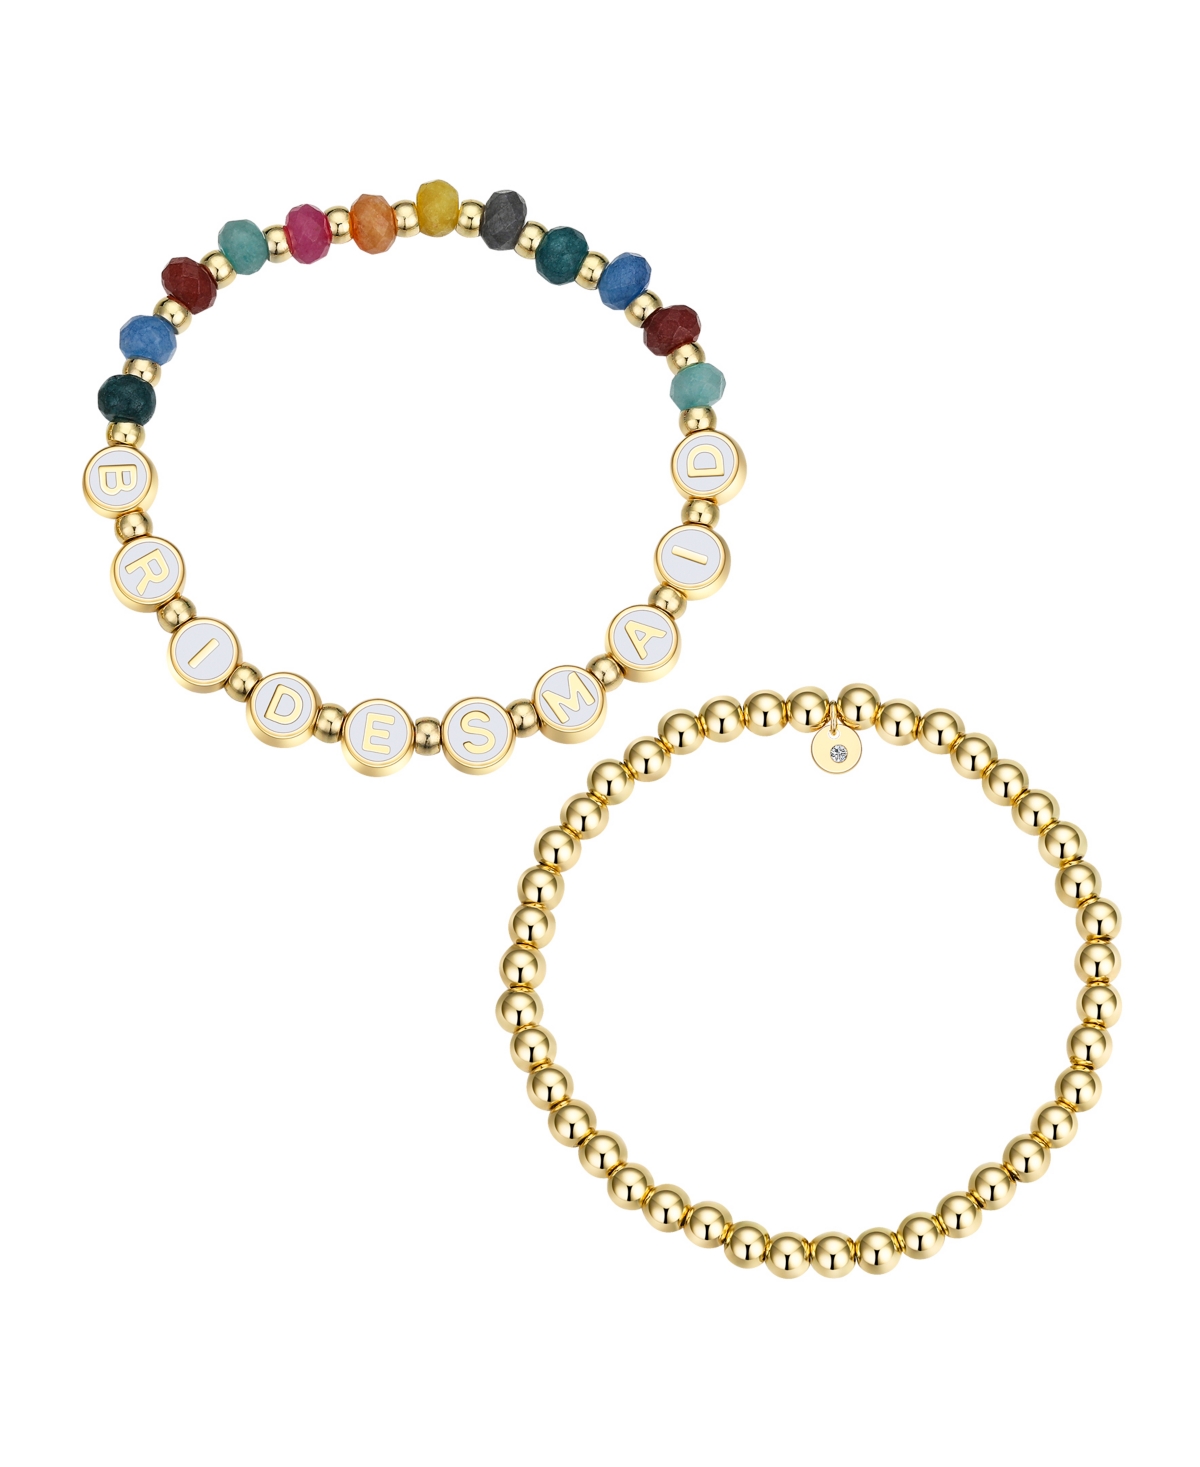 Shop Unwritten Multi Color Quartz Bridesmaid Stone And Beaded Stretch Bracelet Set In Gold